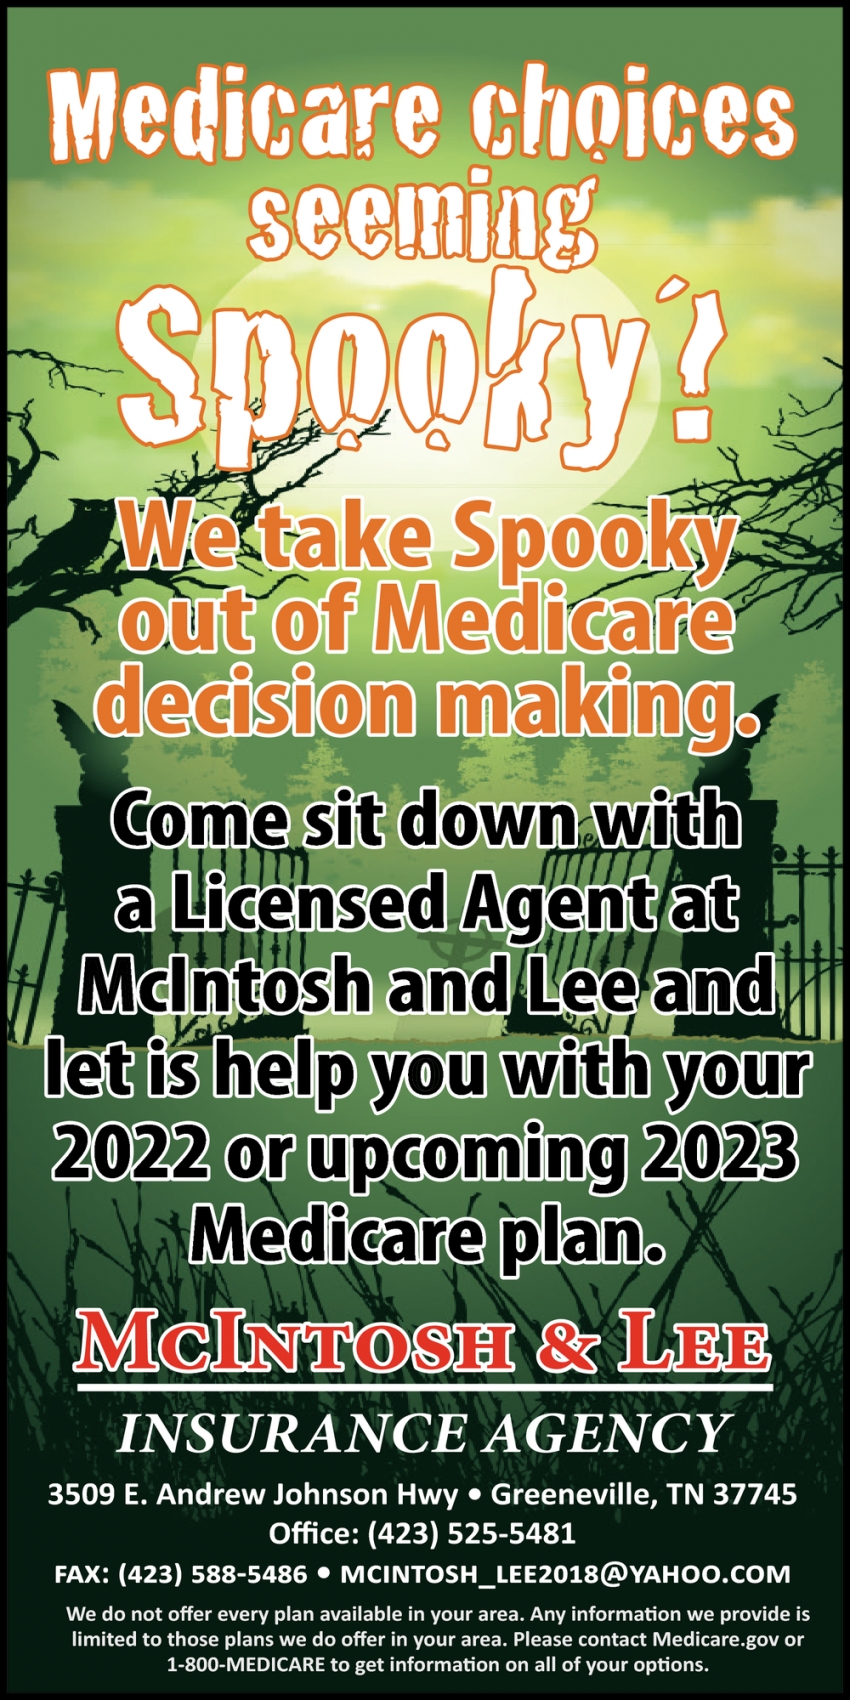 Medicare Choices, McIntosh & Lee Insurance Agency, Greeneville, TN